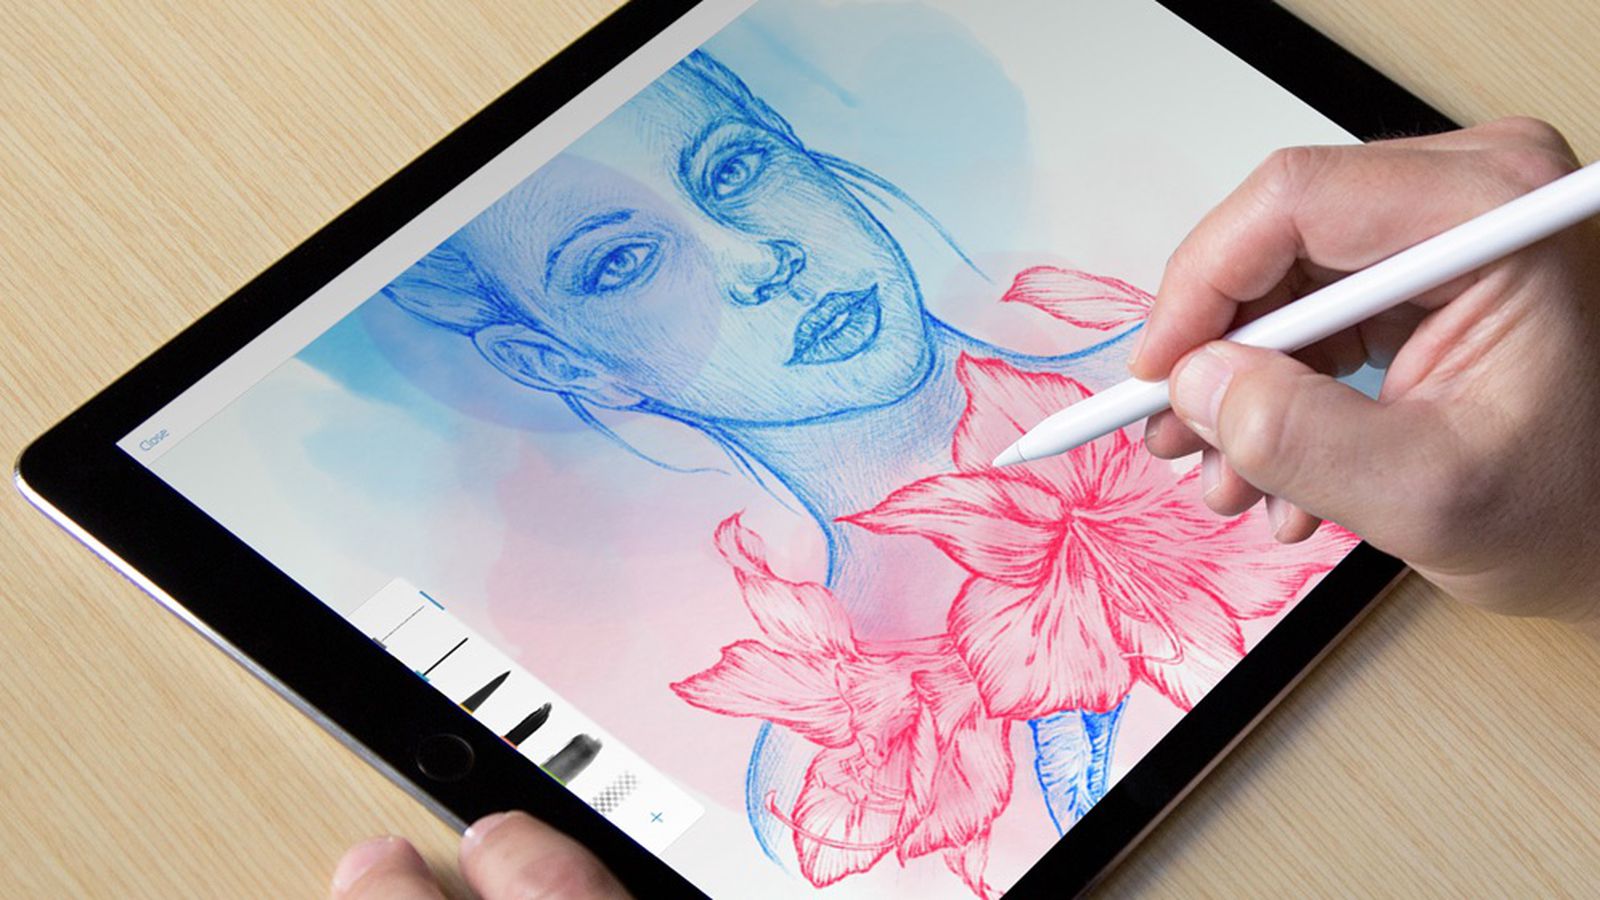  Adobe Photoshop Sketch Vs Adobe Draw for Beginner